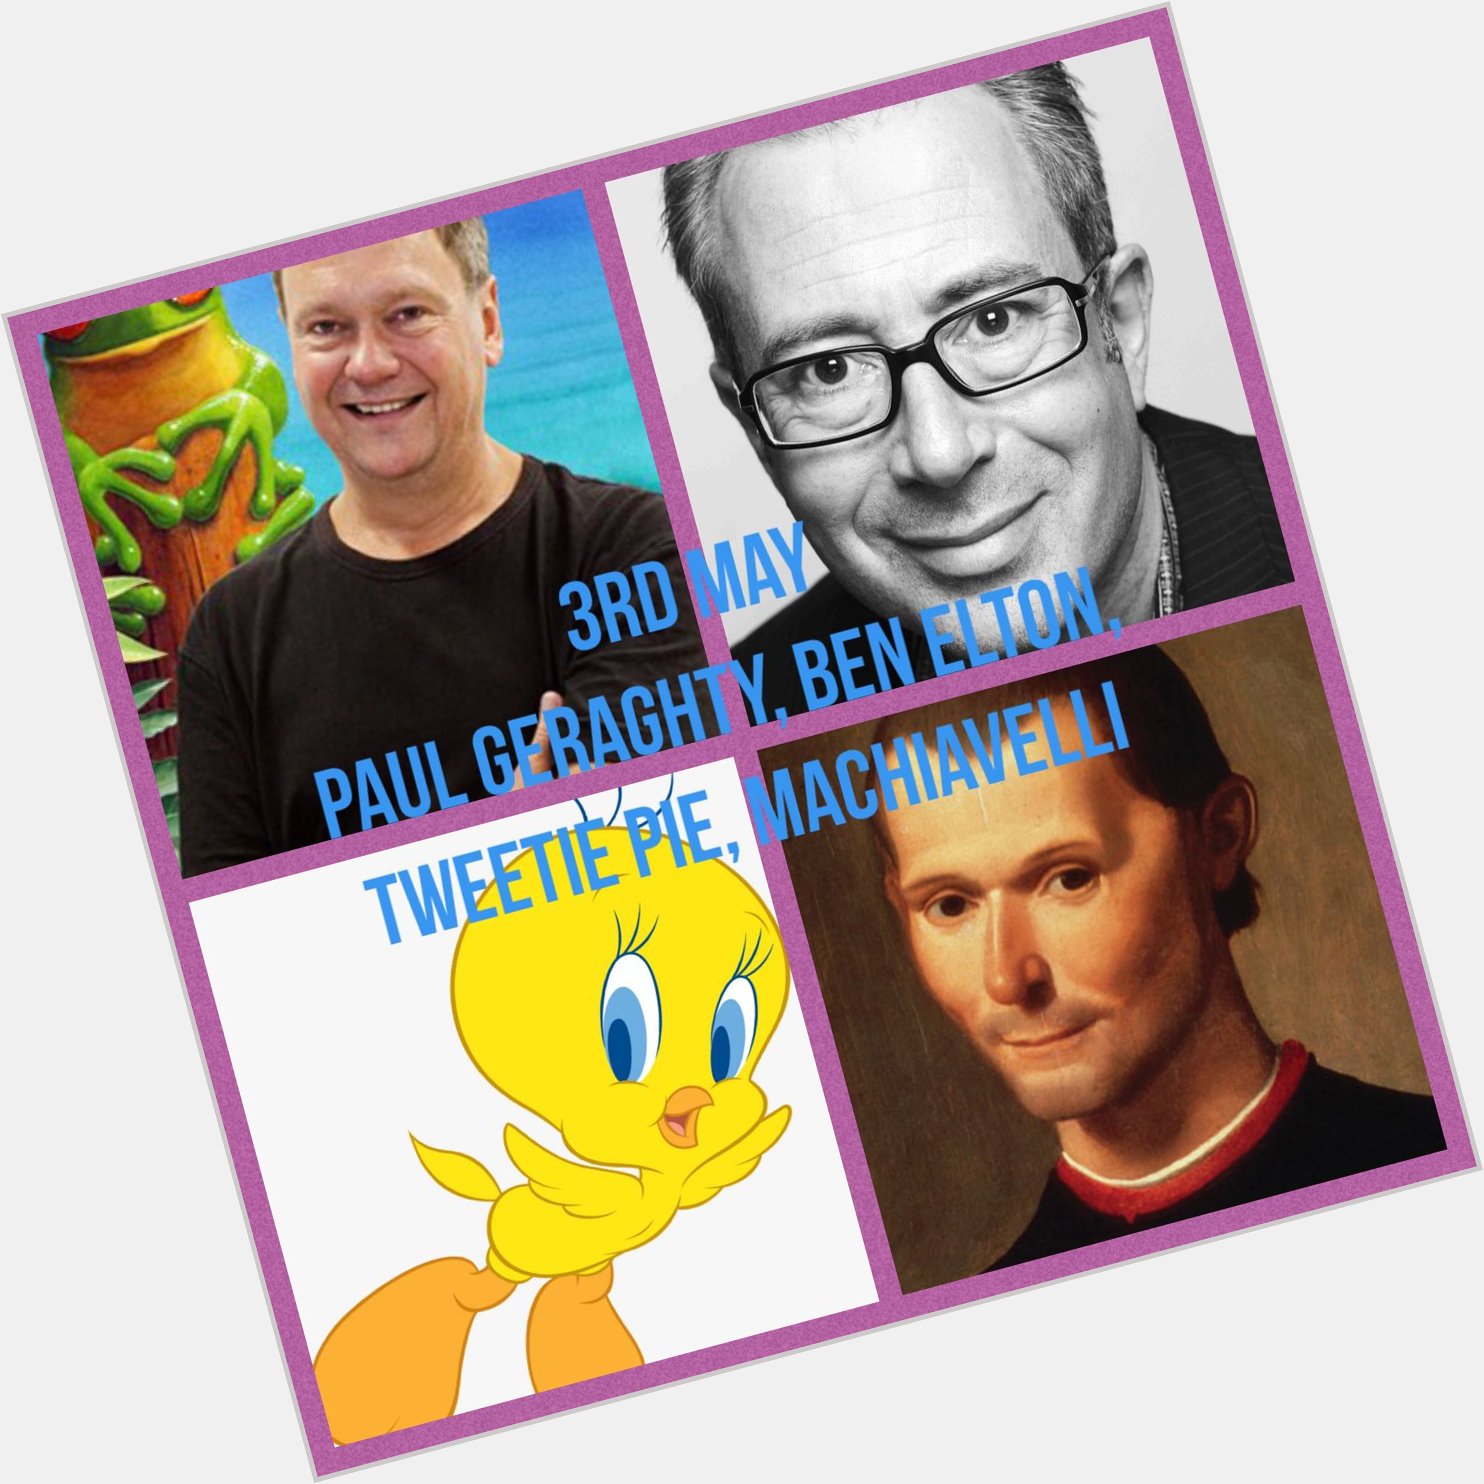  3rd May: Happy Birthday to Paul Geraghty, Ben Elton, Machiavelli and messageie Pie! 